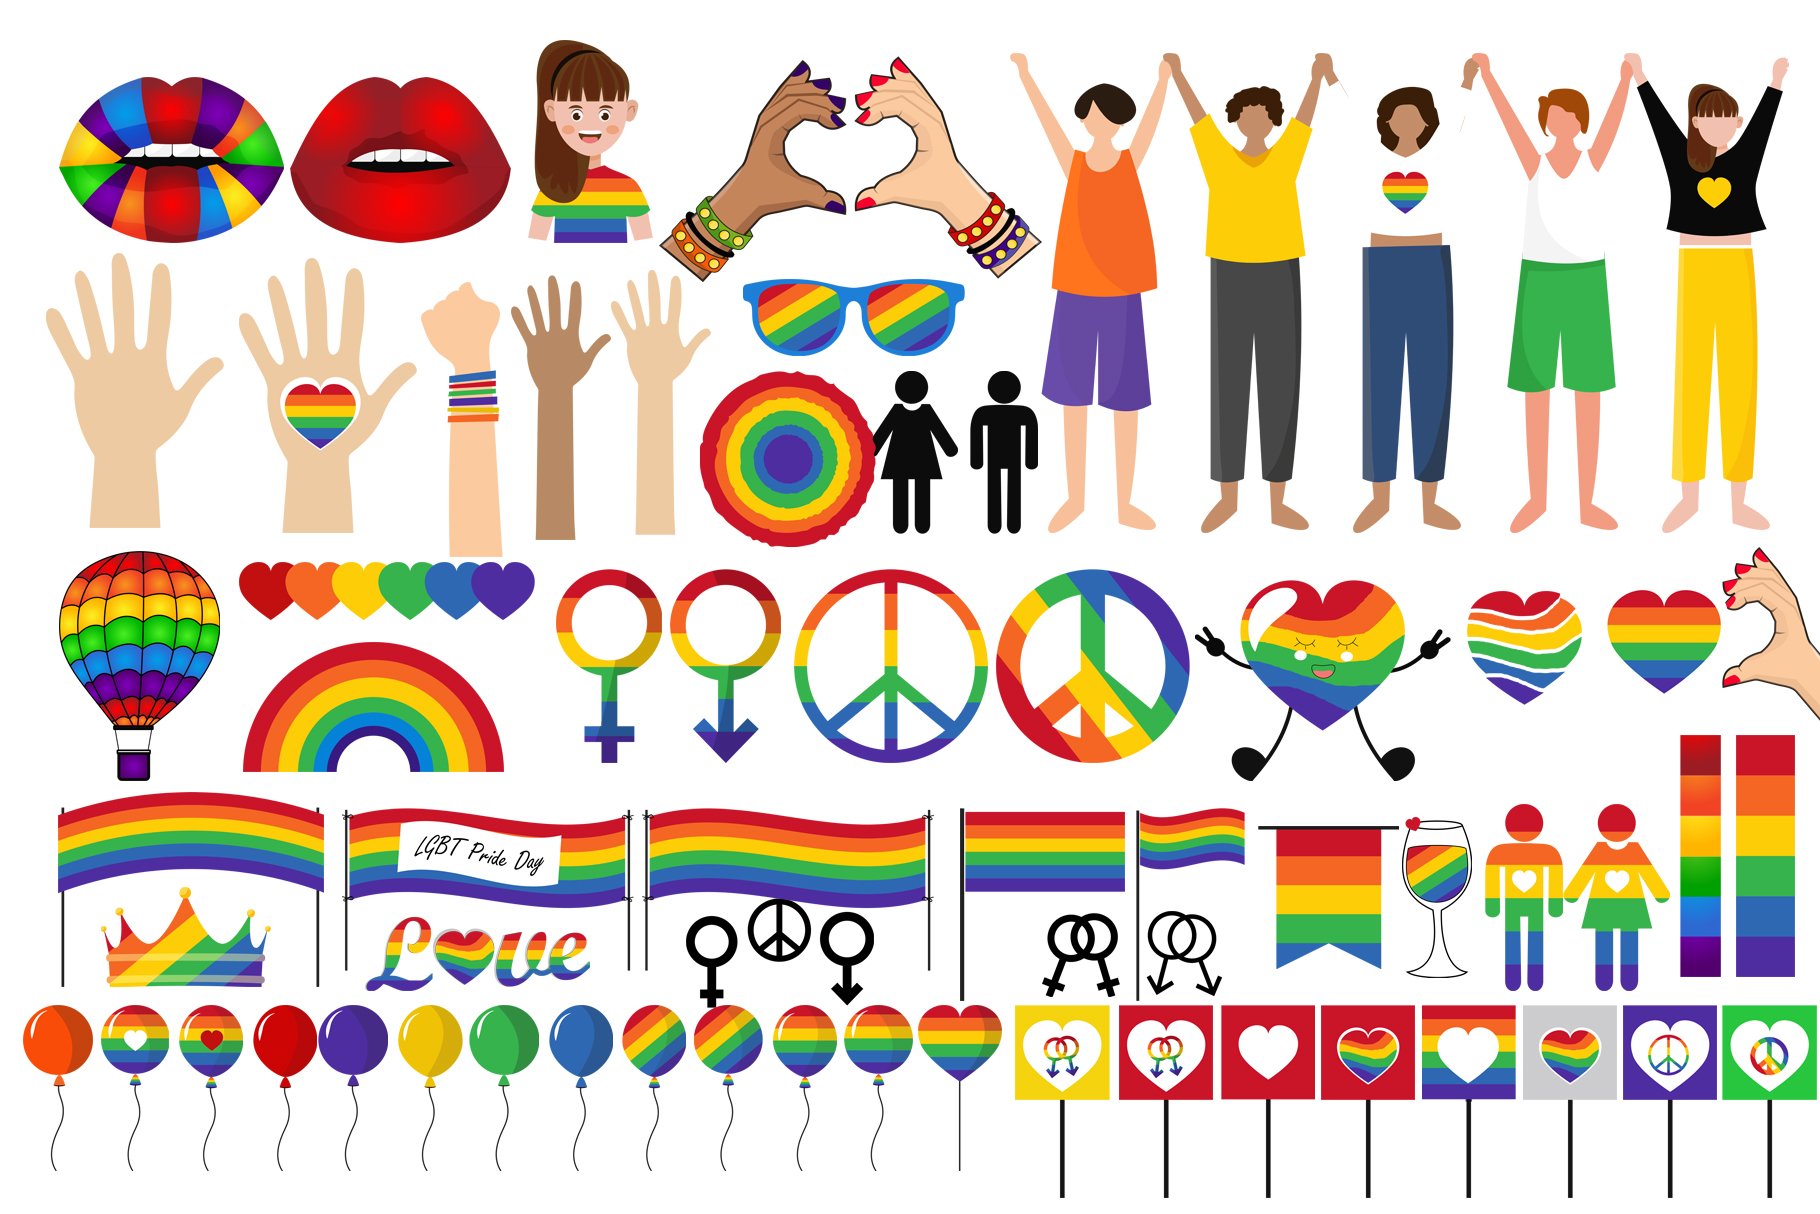 LGBT Pride Month 70+ PNG Element Set cover image.